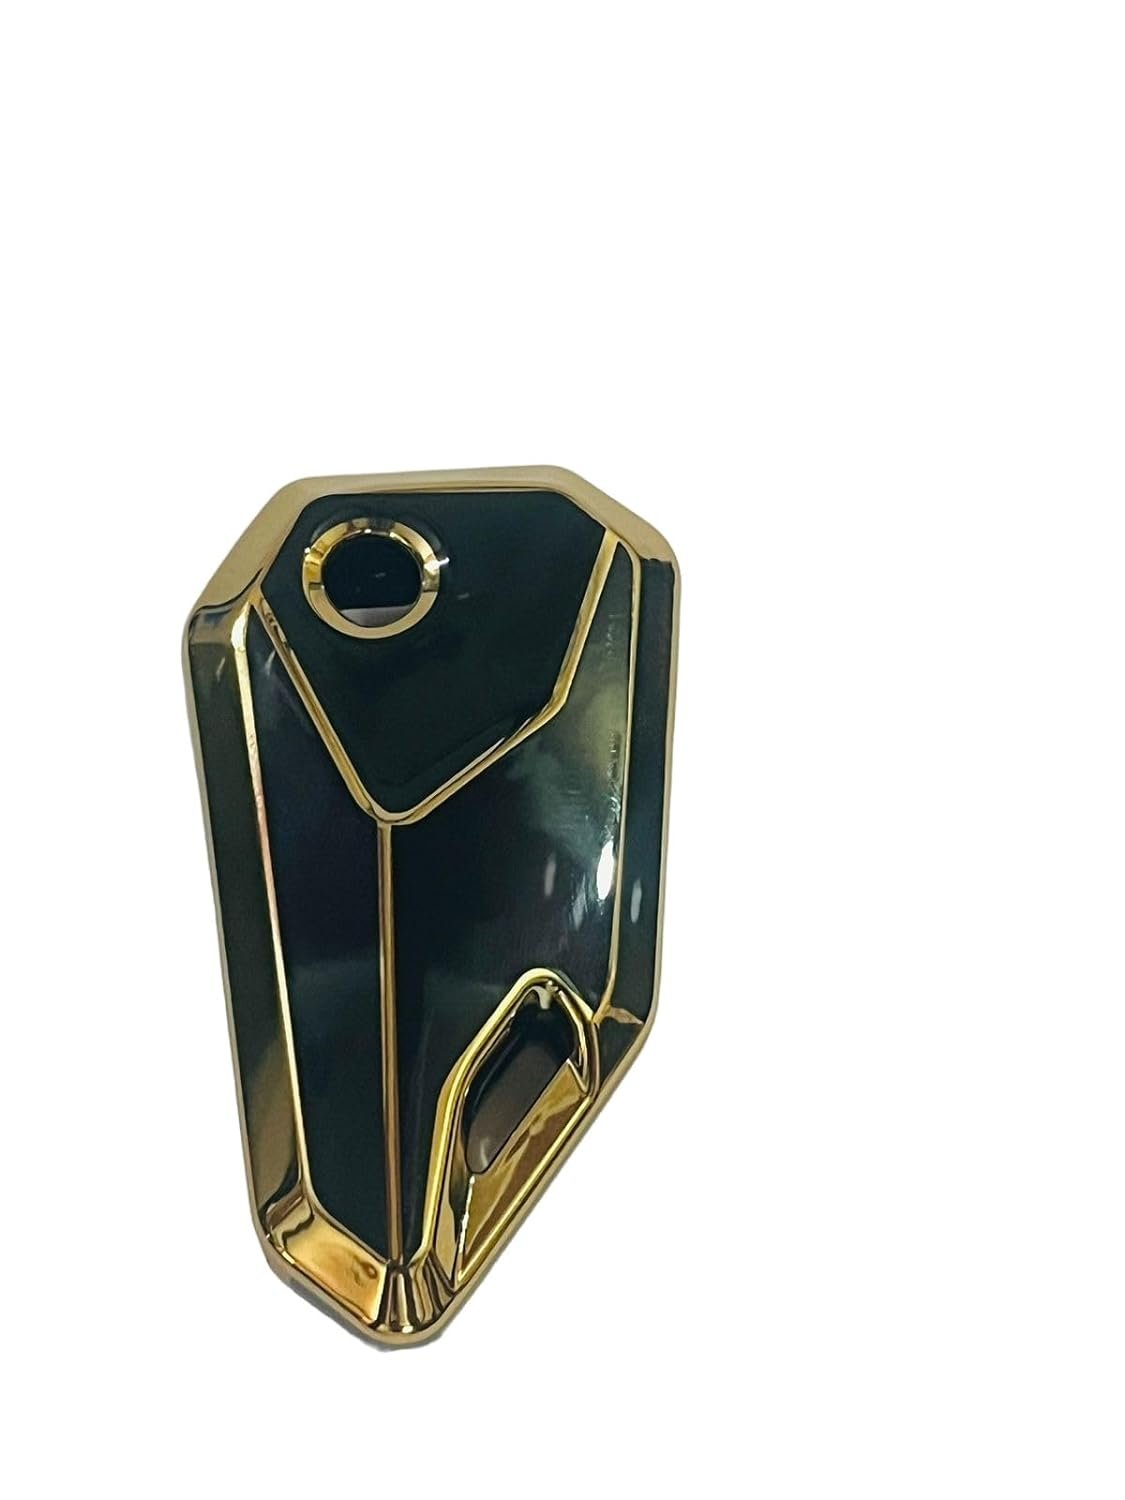 TPU Key Cover Compatible For Universal Bike Flip Key (Gold/Black) Image 